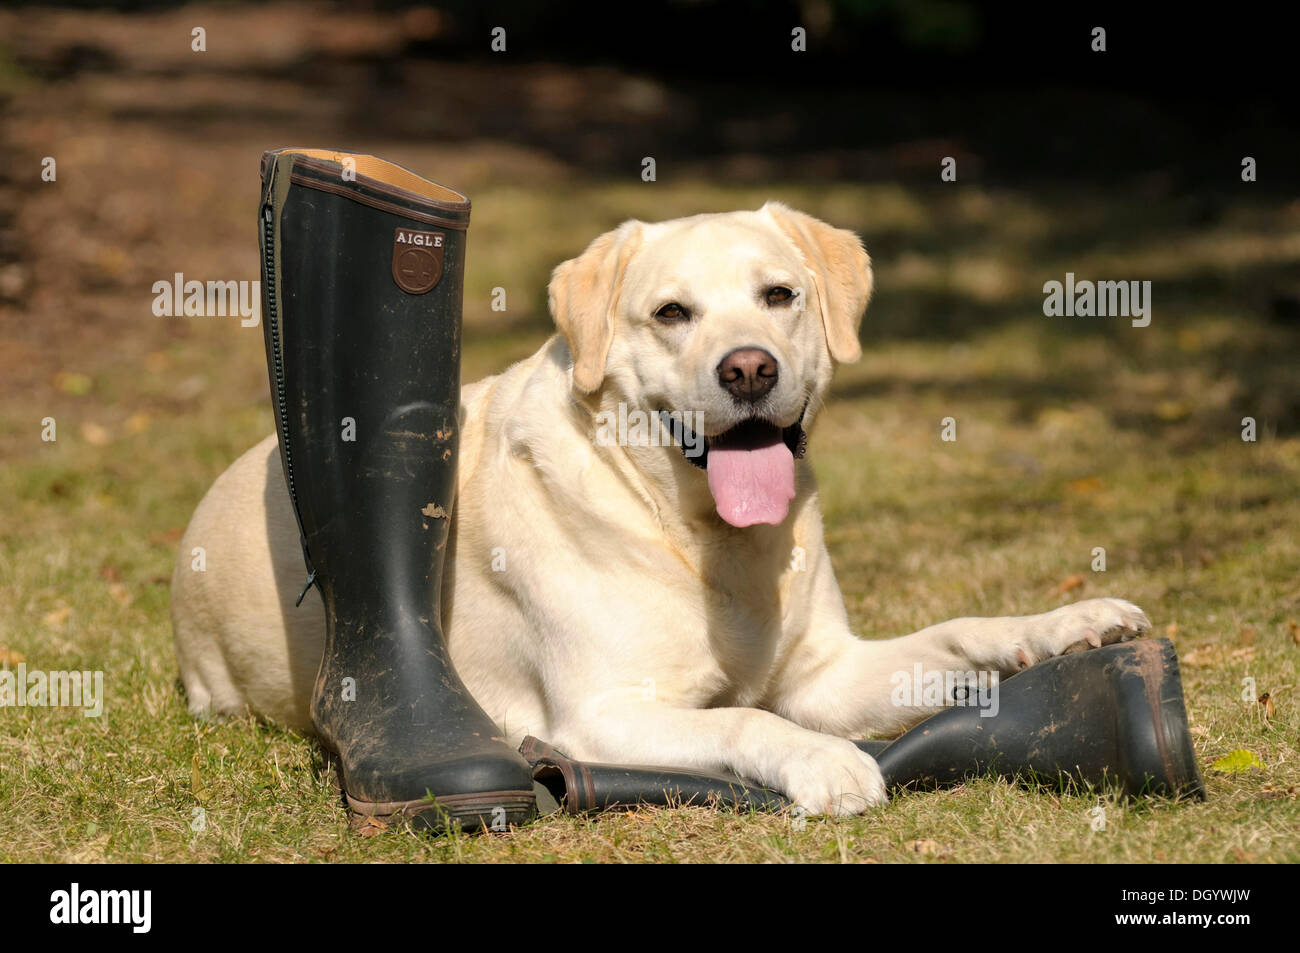 Blonde Labrador-Retriever lying on rubber boots Stock Photo